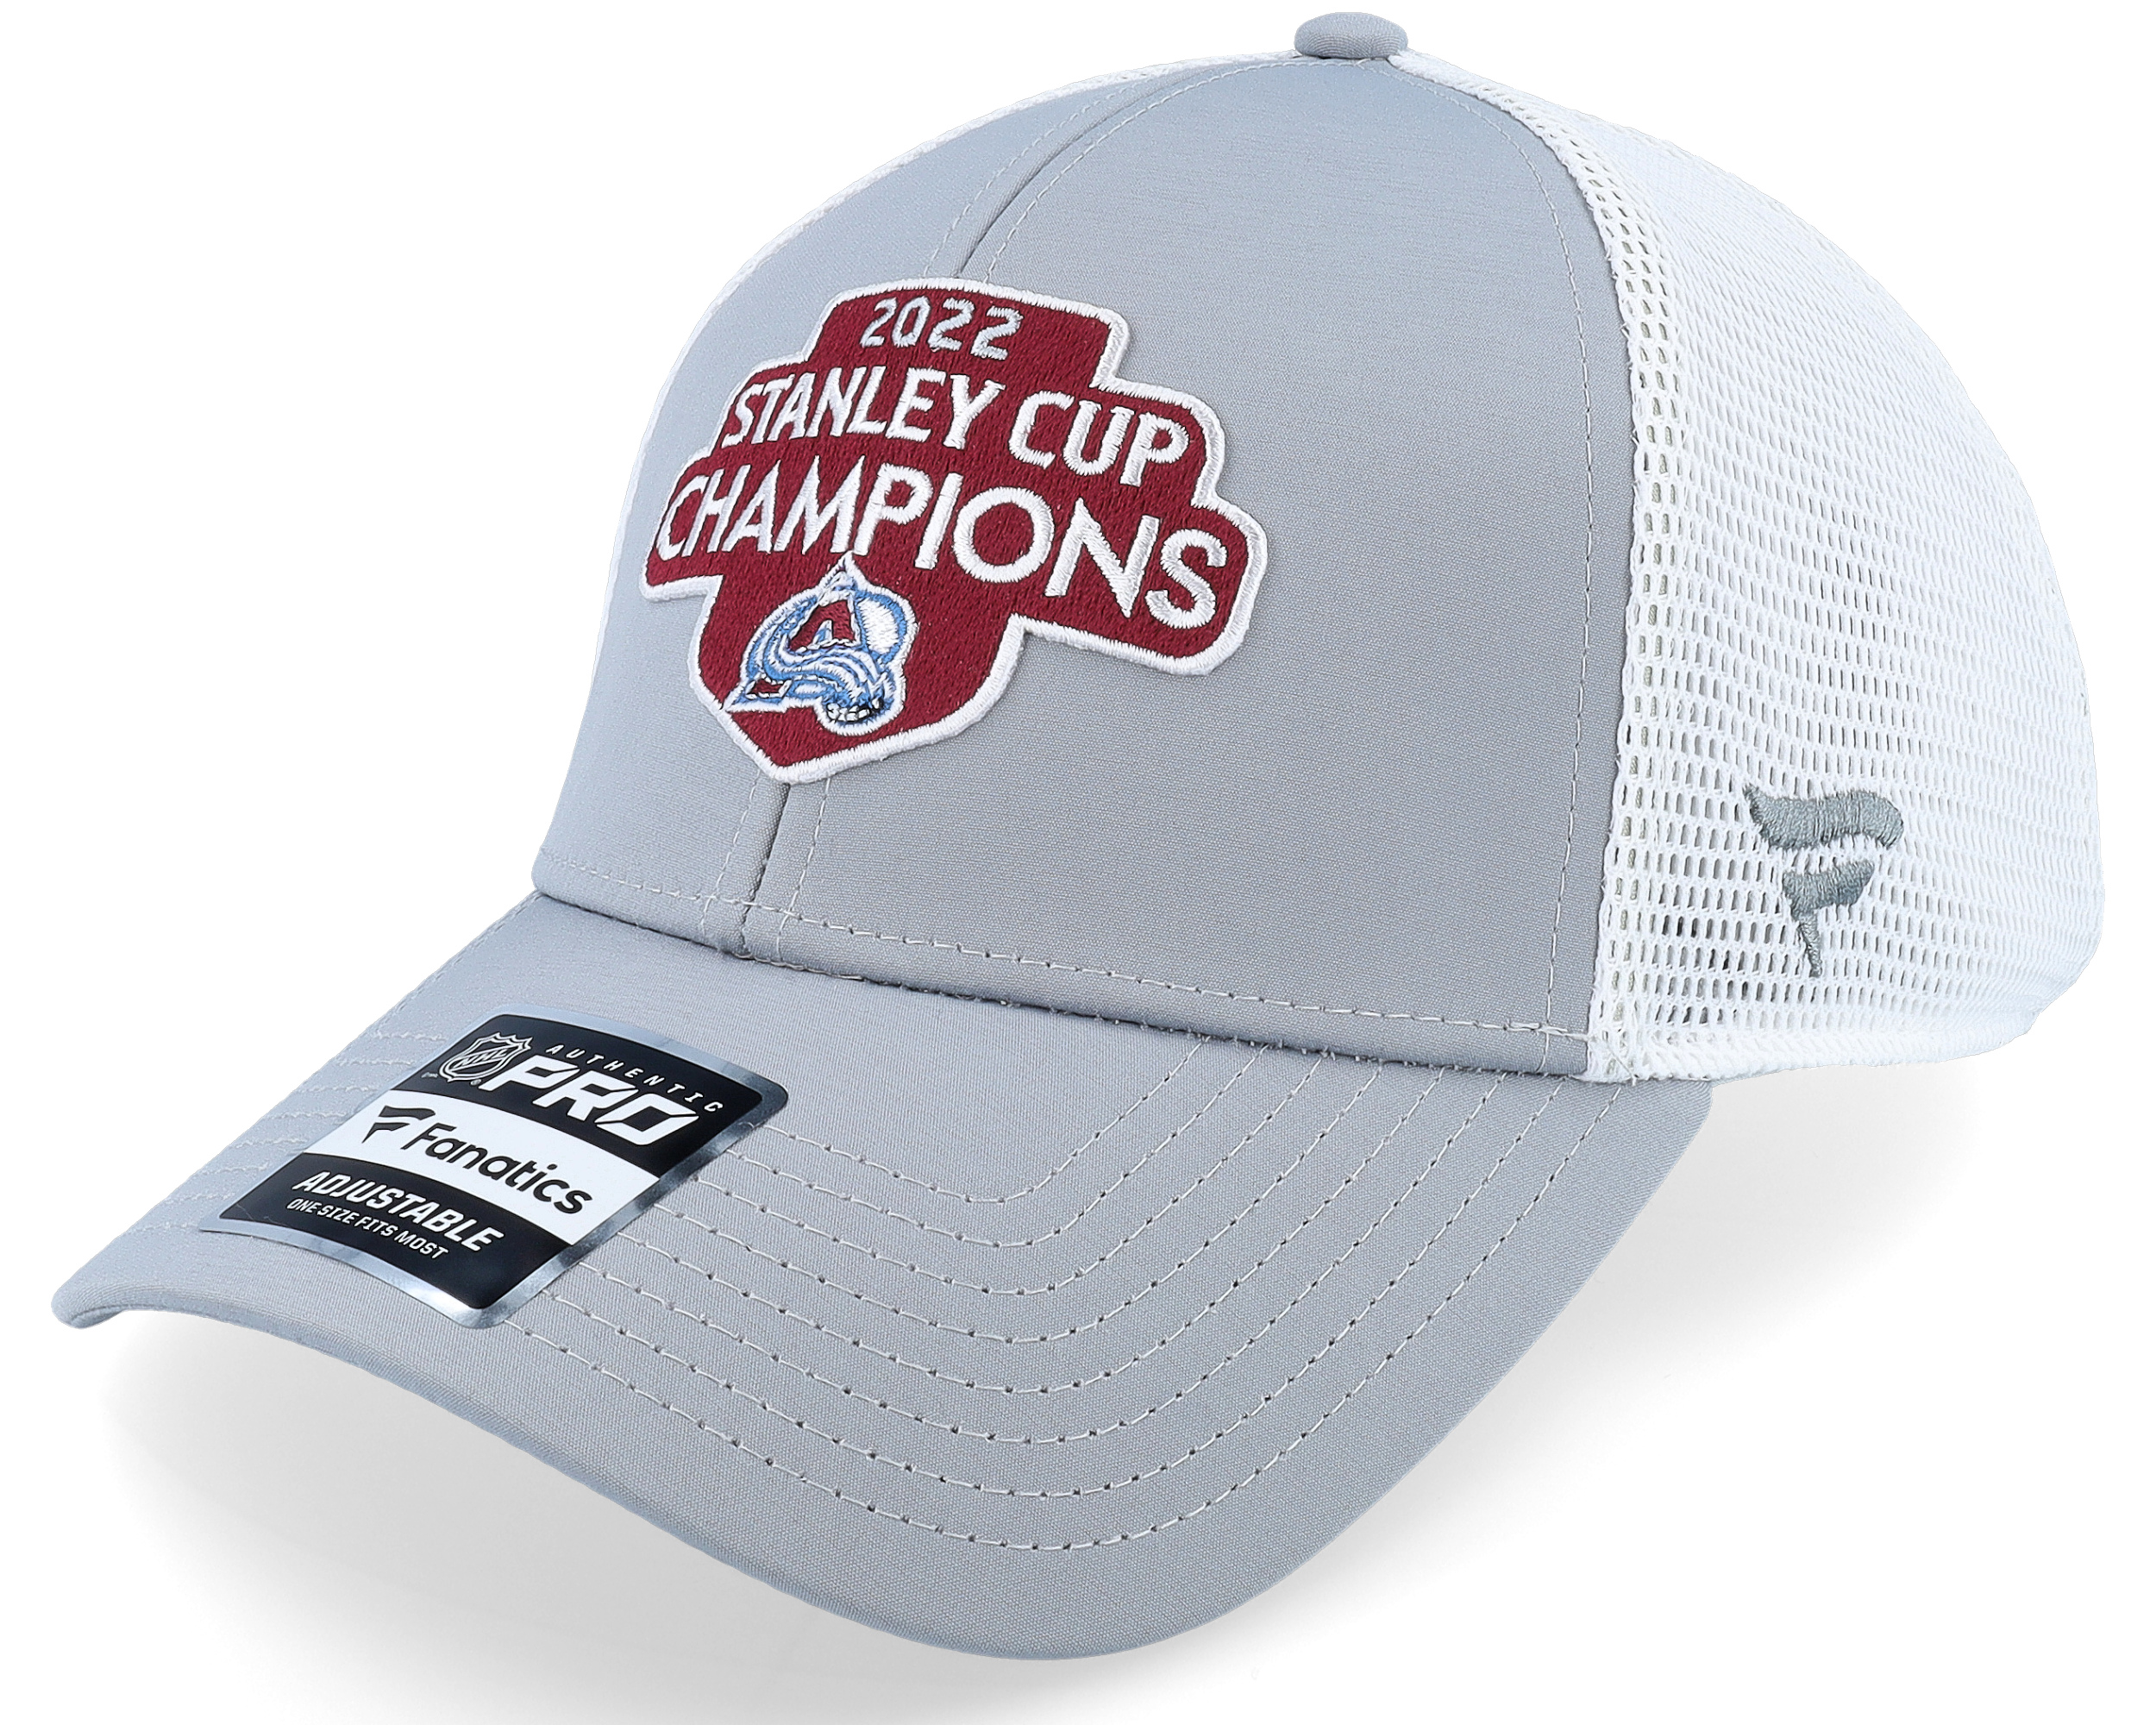 New Fanatics Colorado Avalanche Stanley Cup Champions Hat